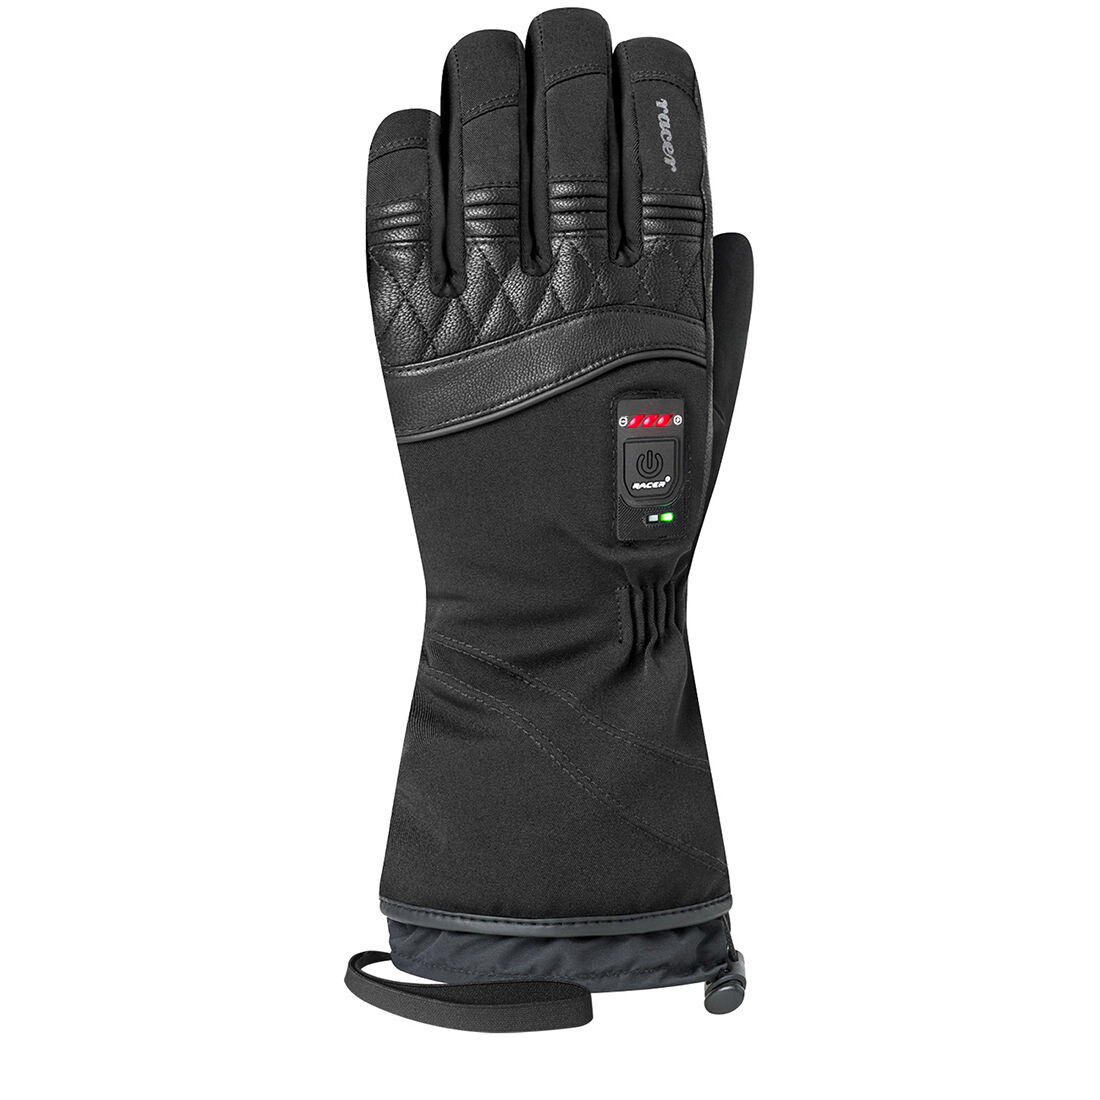 Racer Connectic 4 - Gloves - Women's